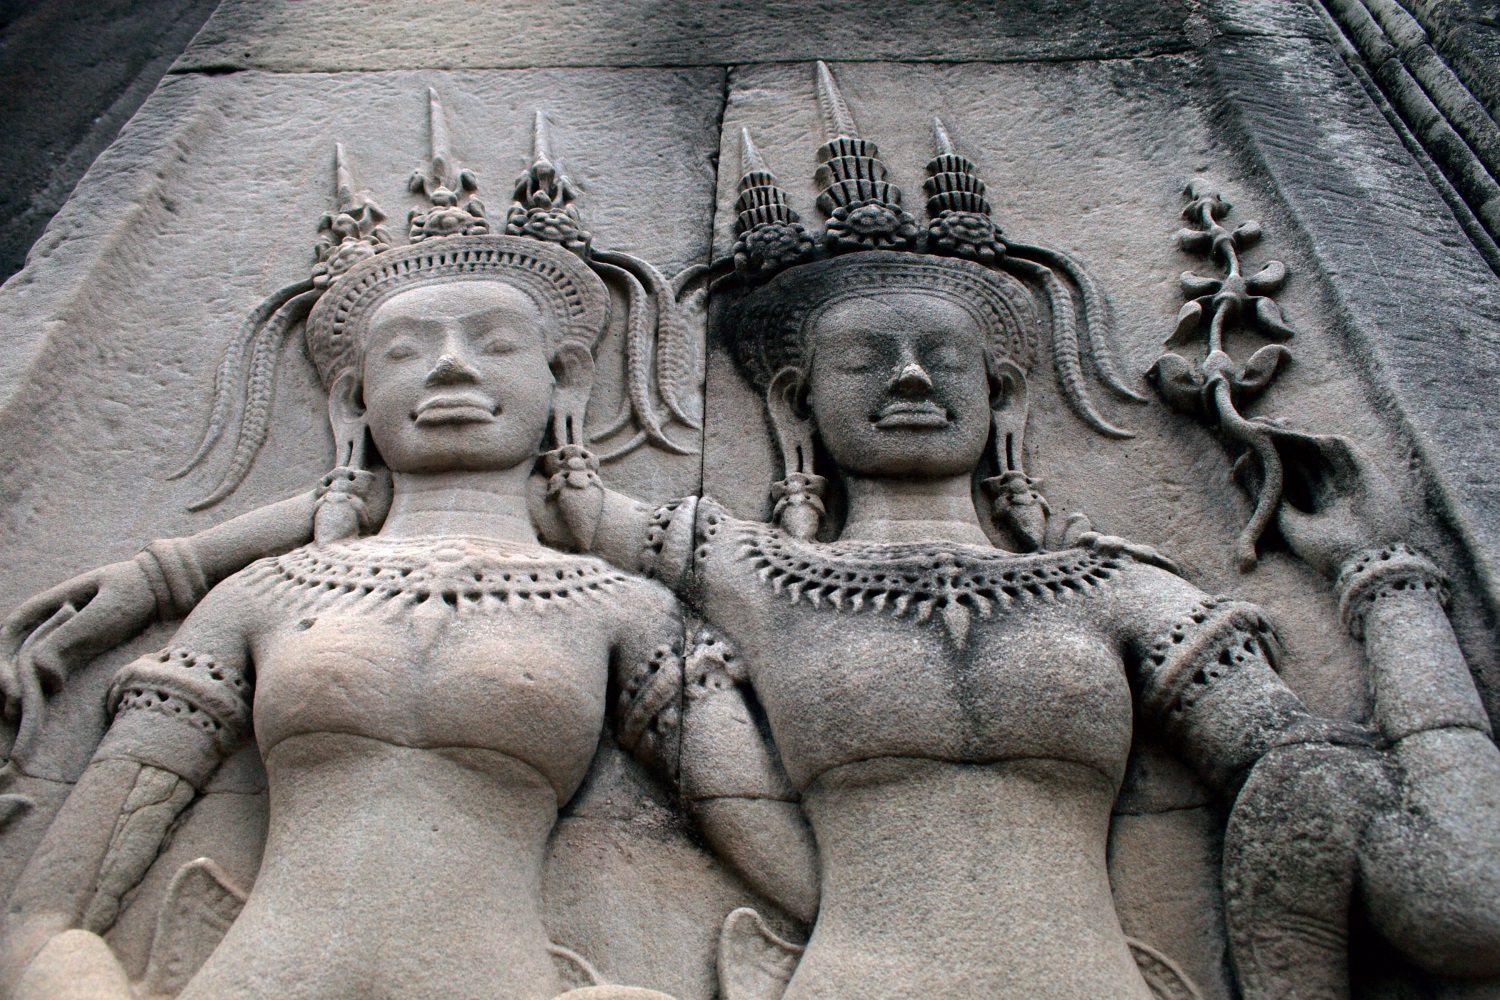 Detail of apsara sculptures, Angkor Wat